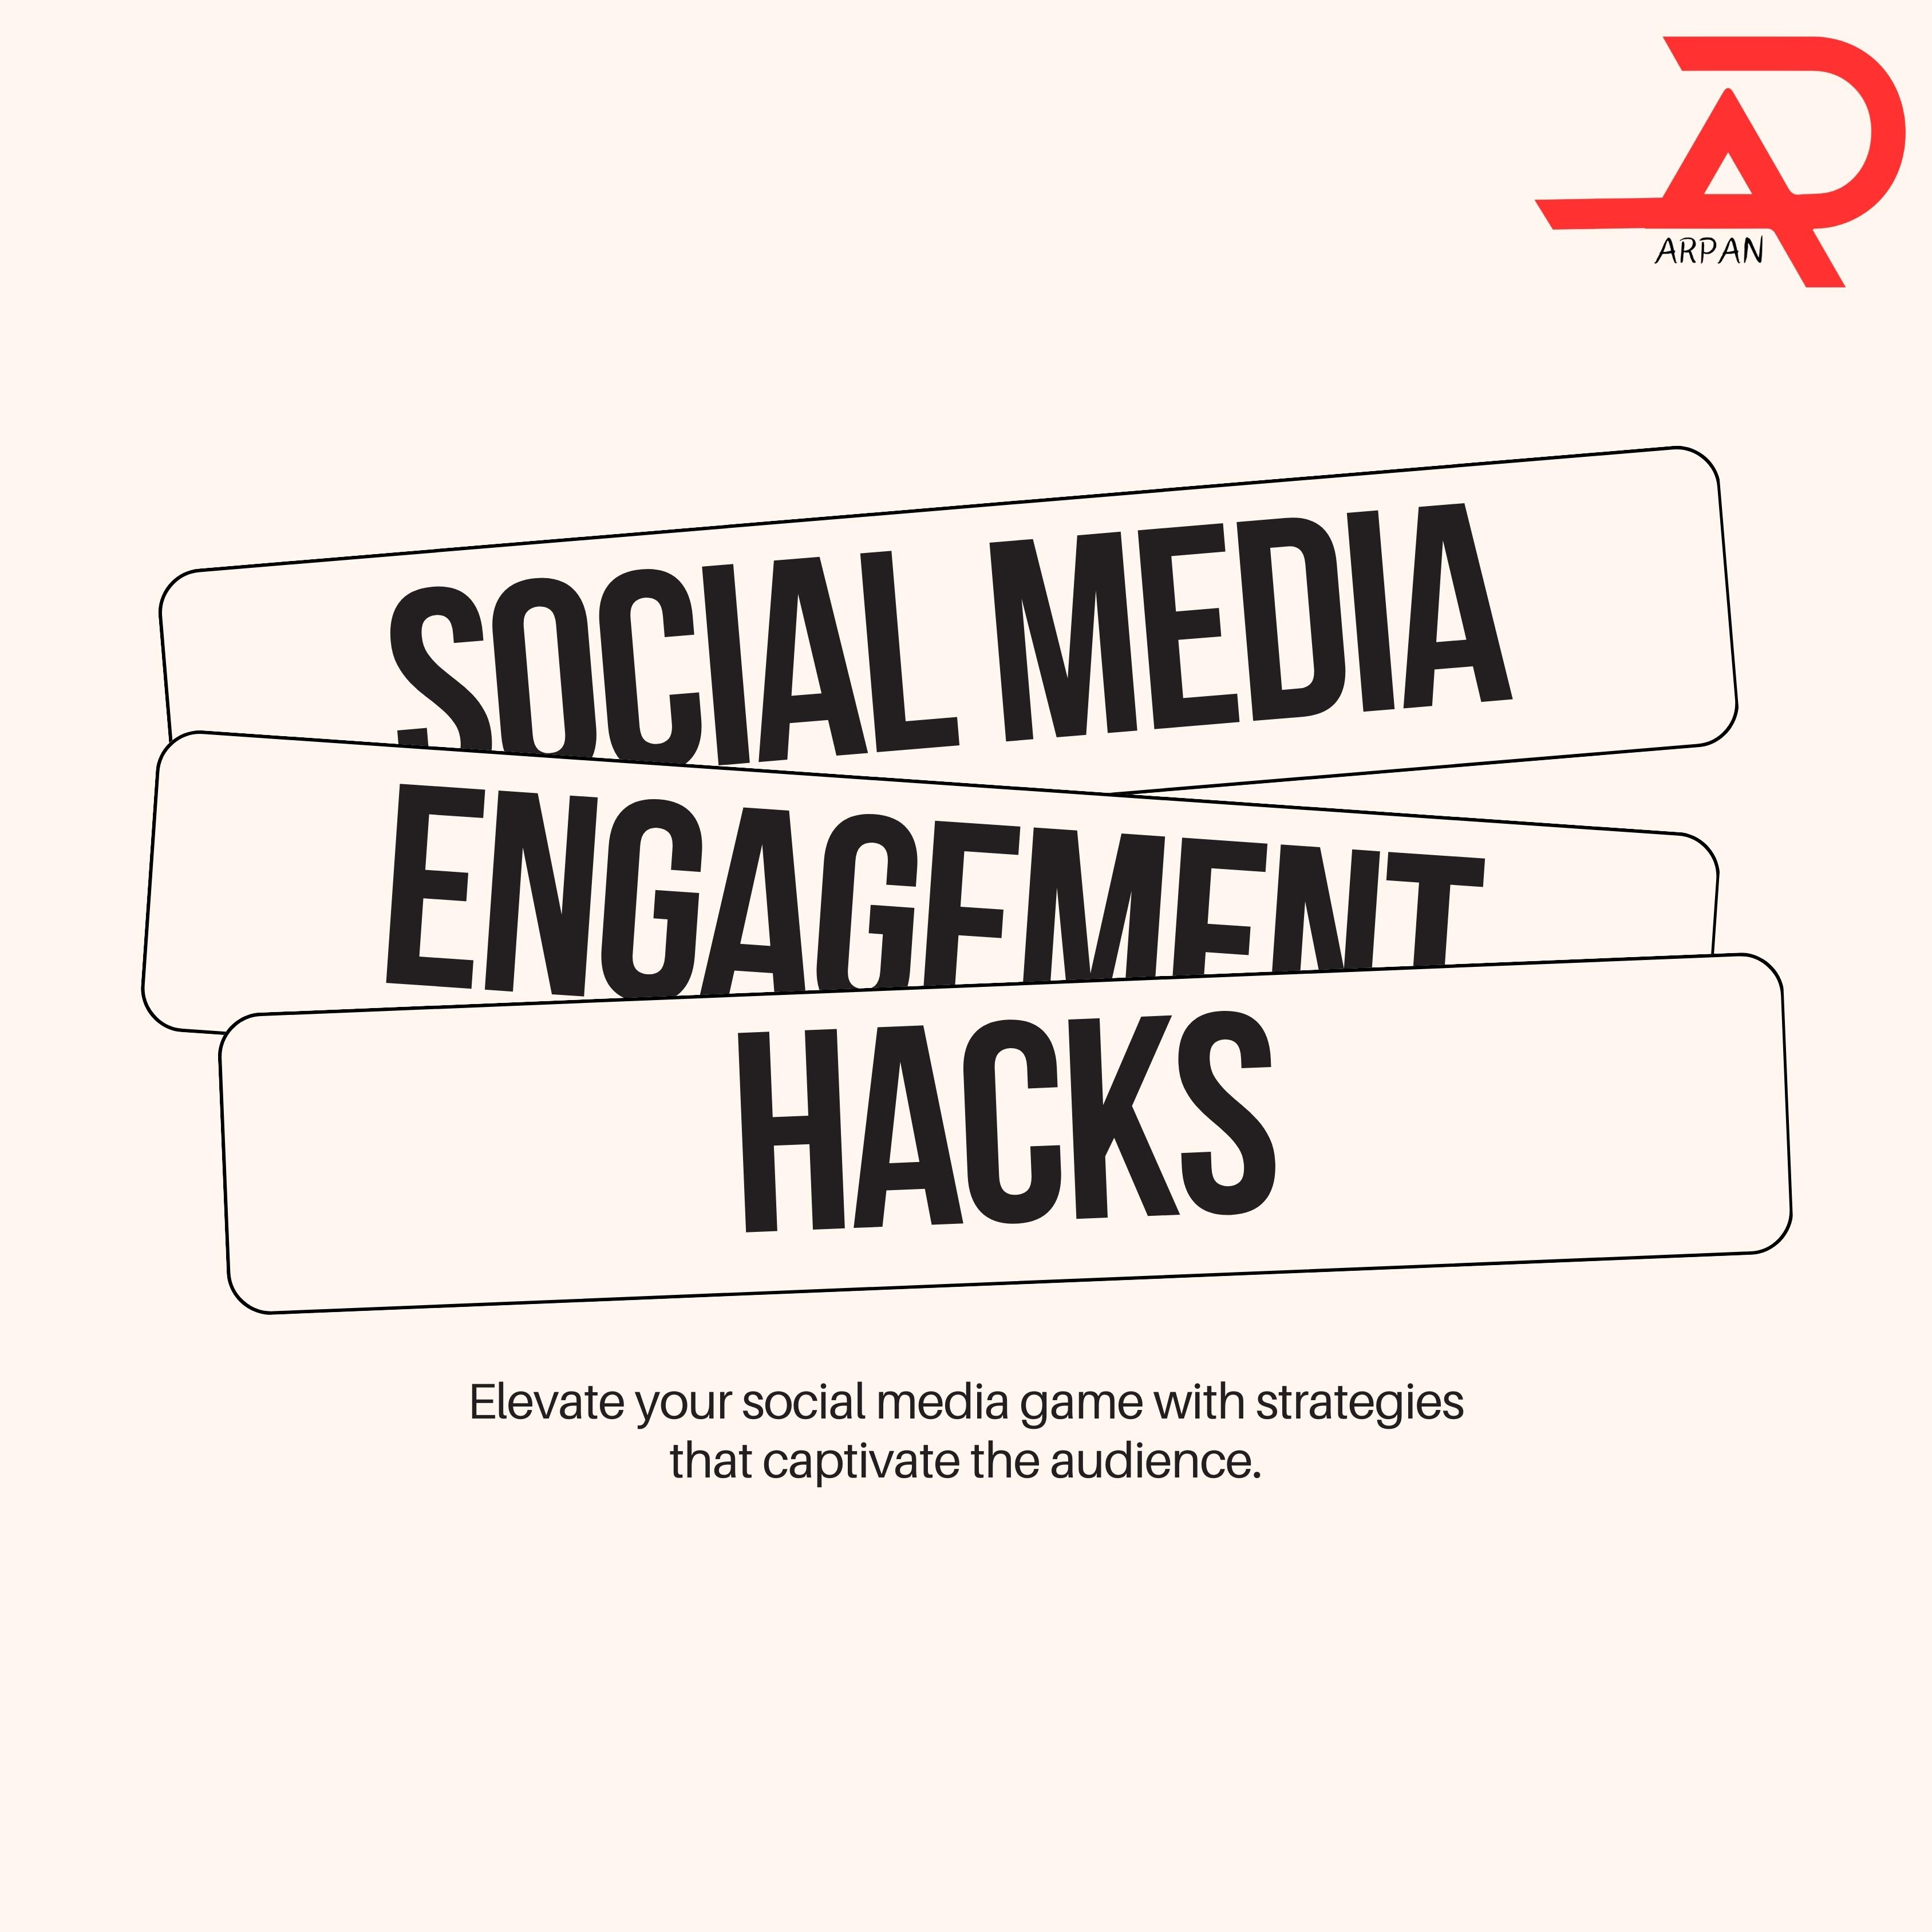  Social Media Engagement Hacks 